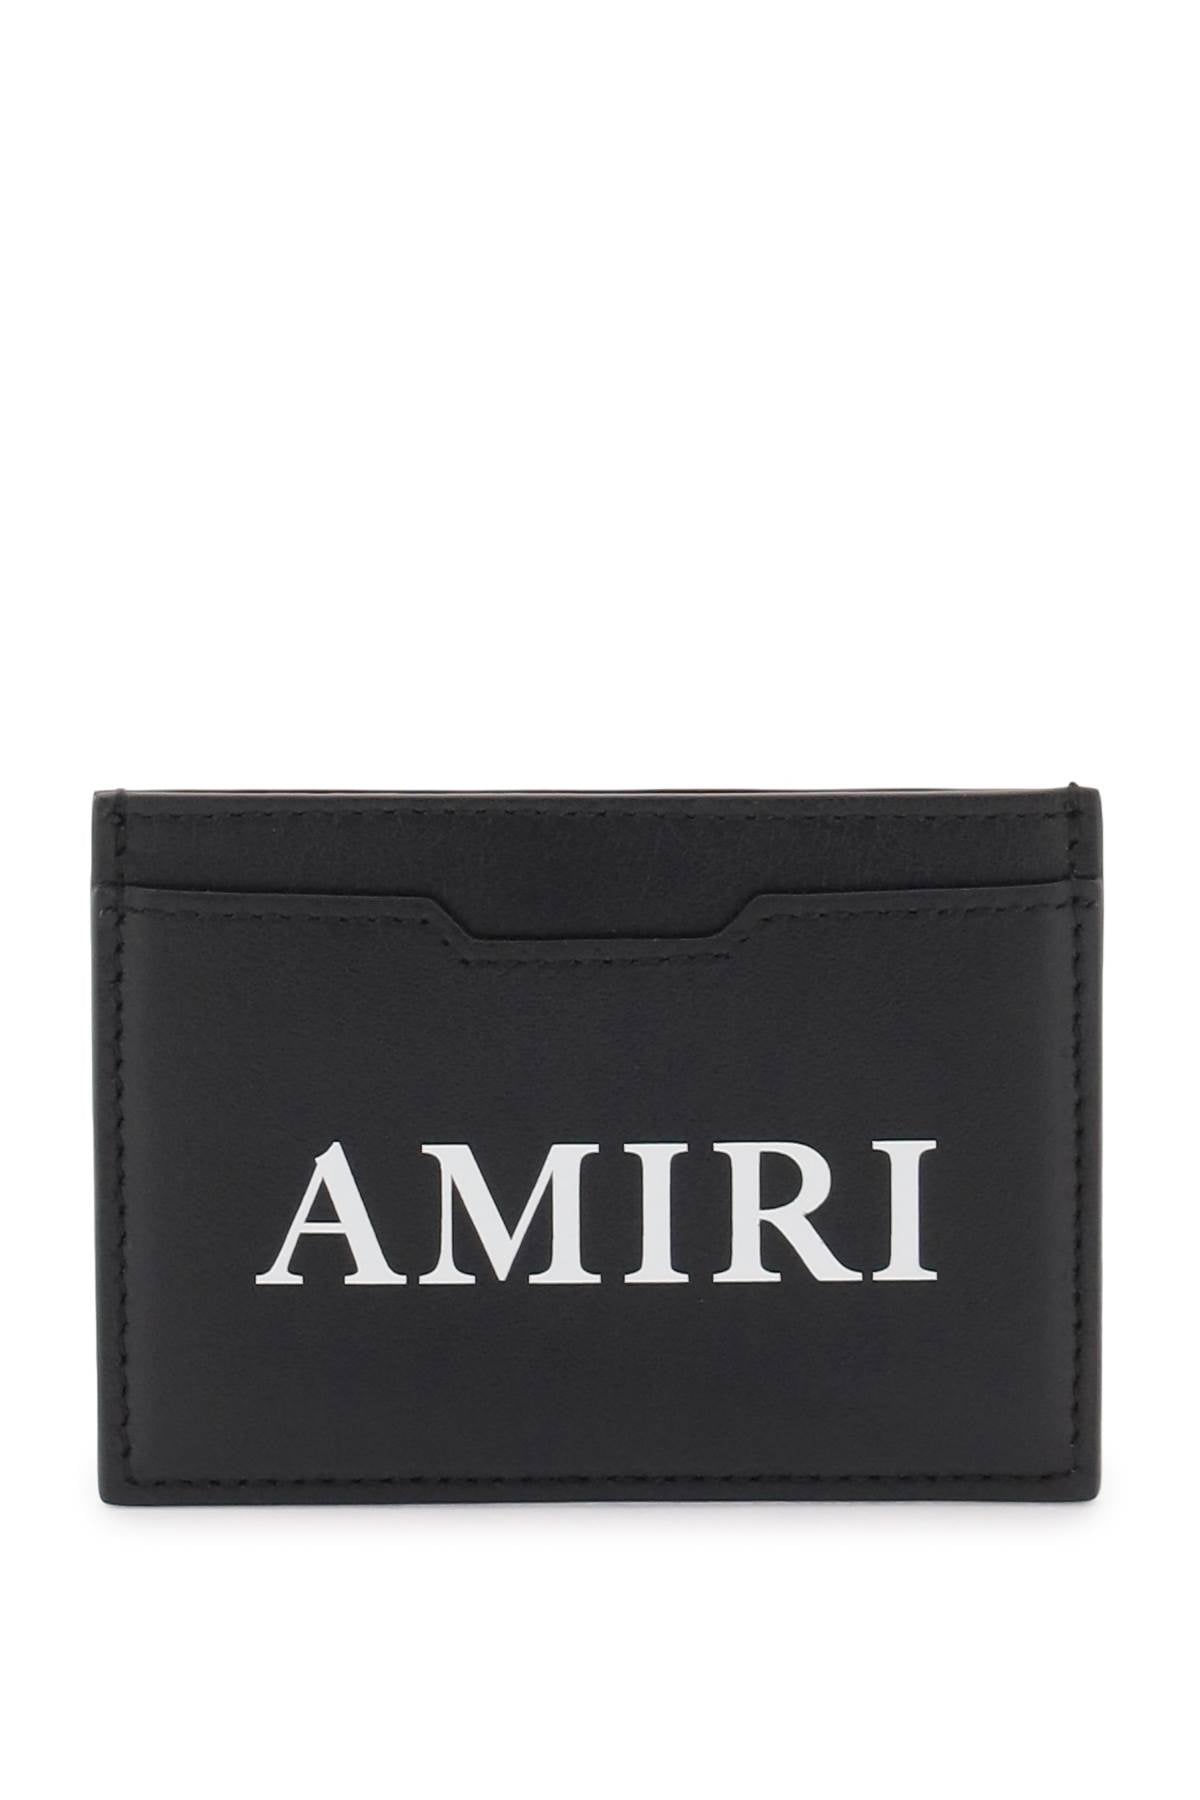 Amiri logo cardholder-0